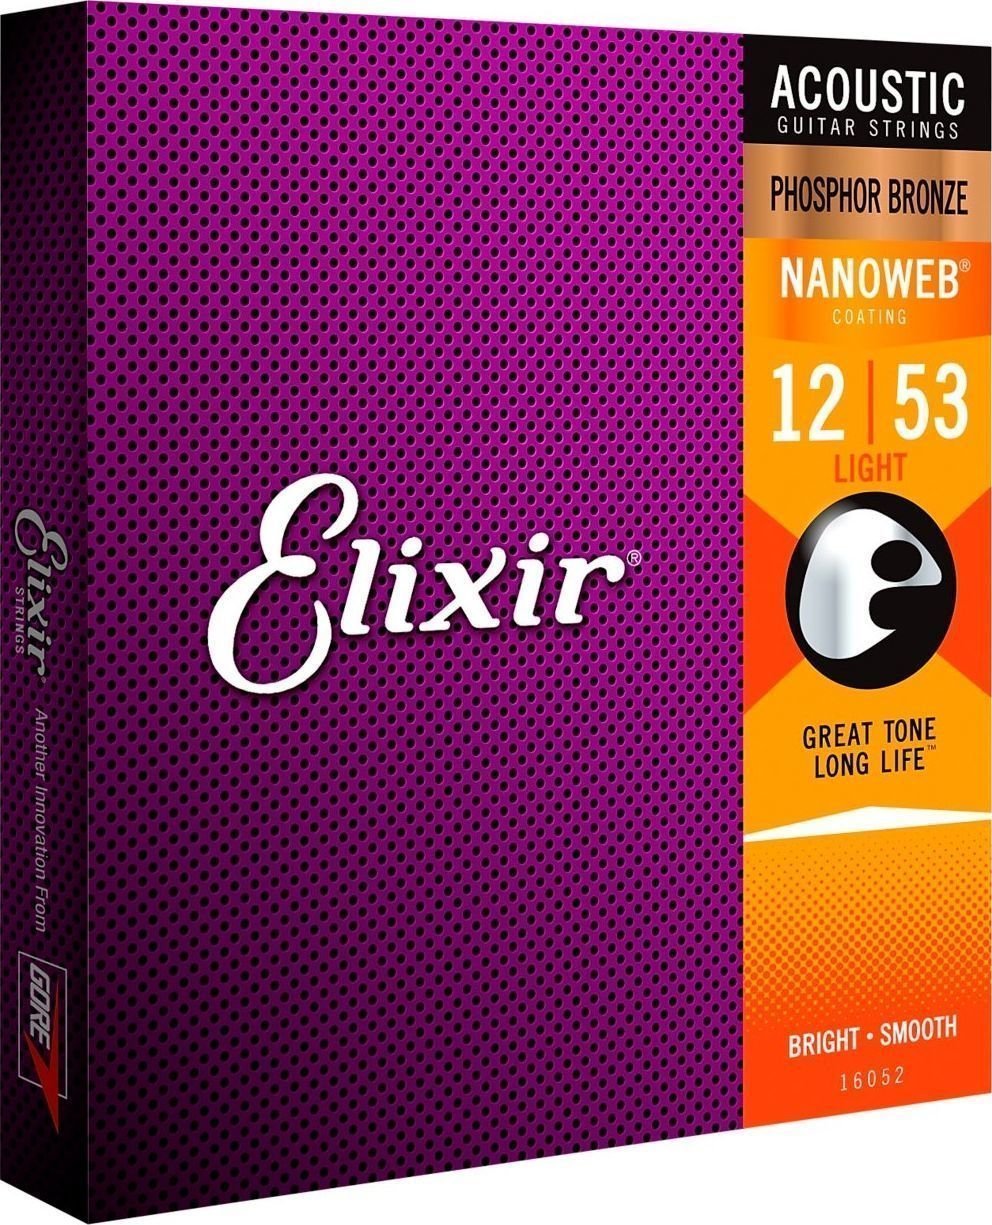 Corzi chitare acustice Elixir 16052 Nanoweb 12-53